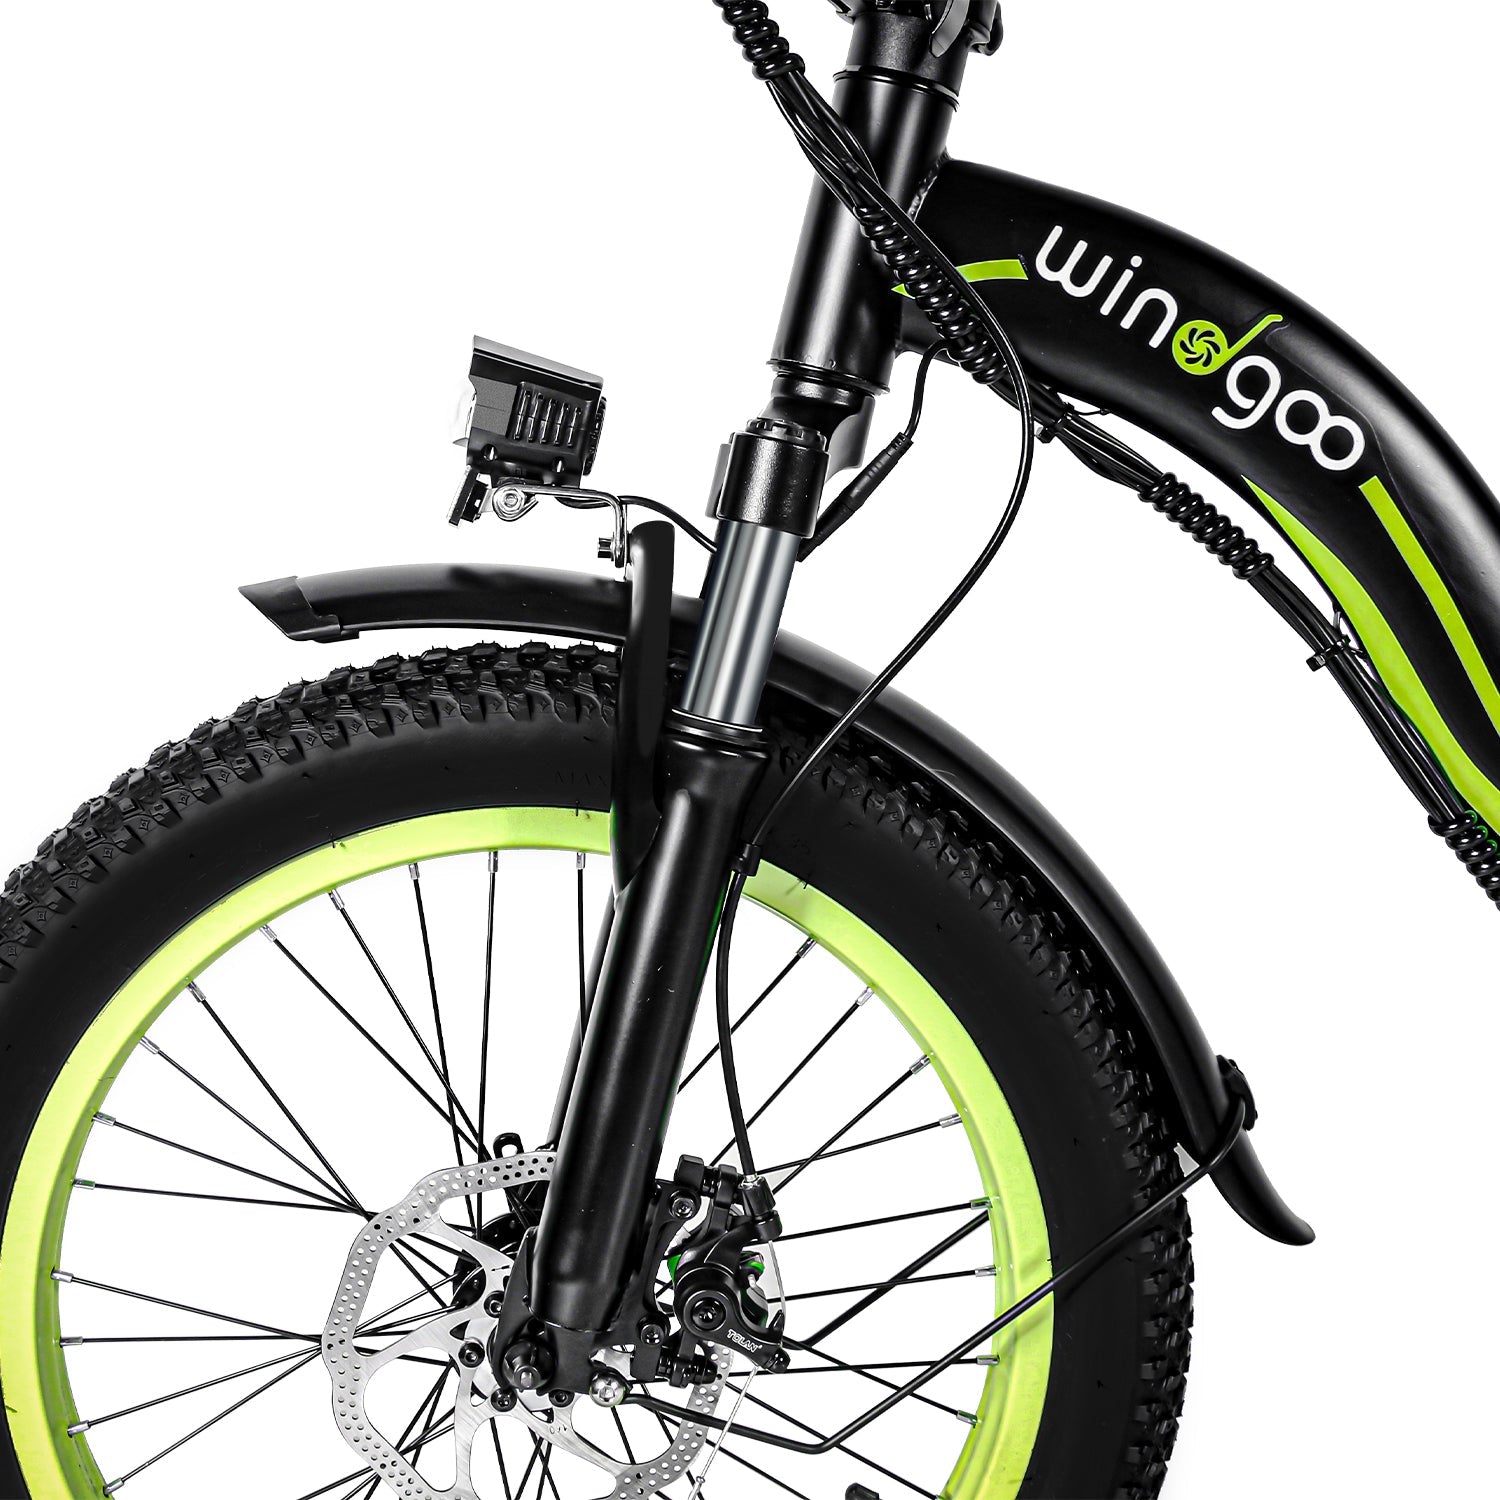 Windgoo E20 All-Terrain Lightweight Foldable E-Bike